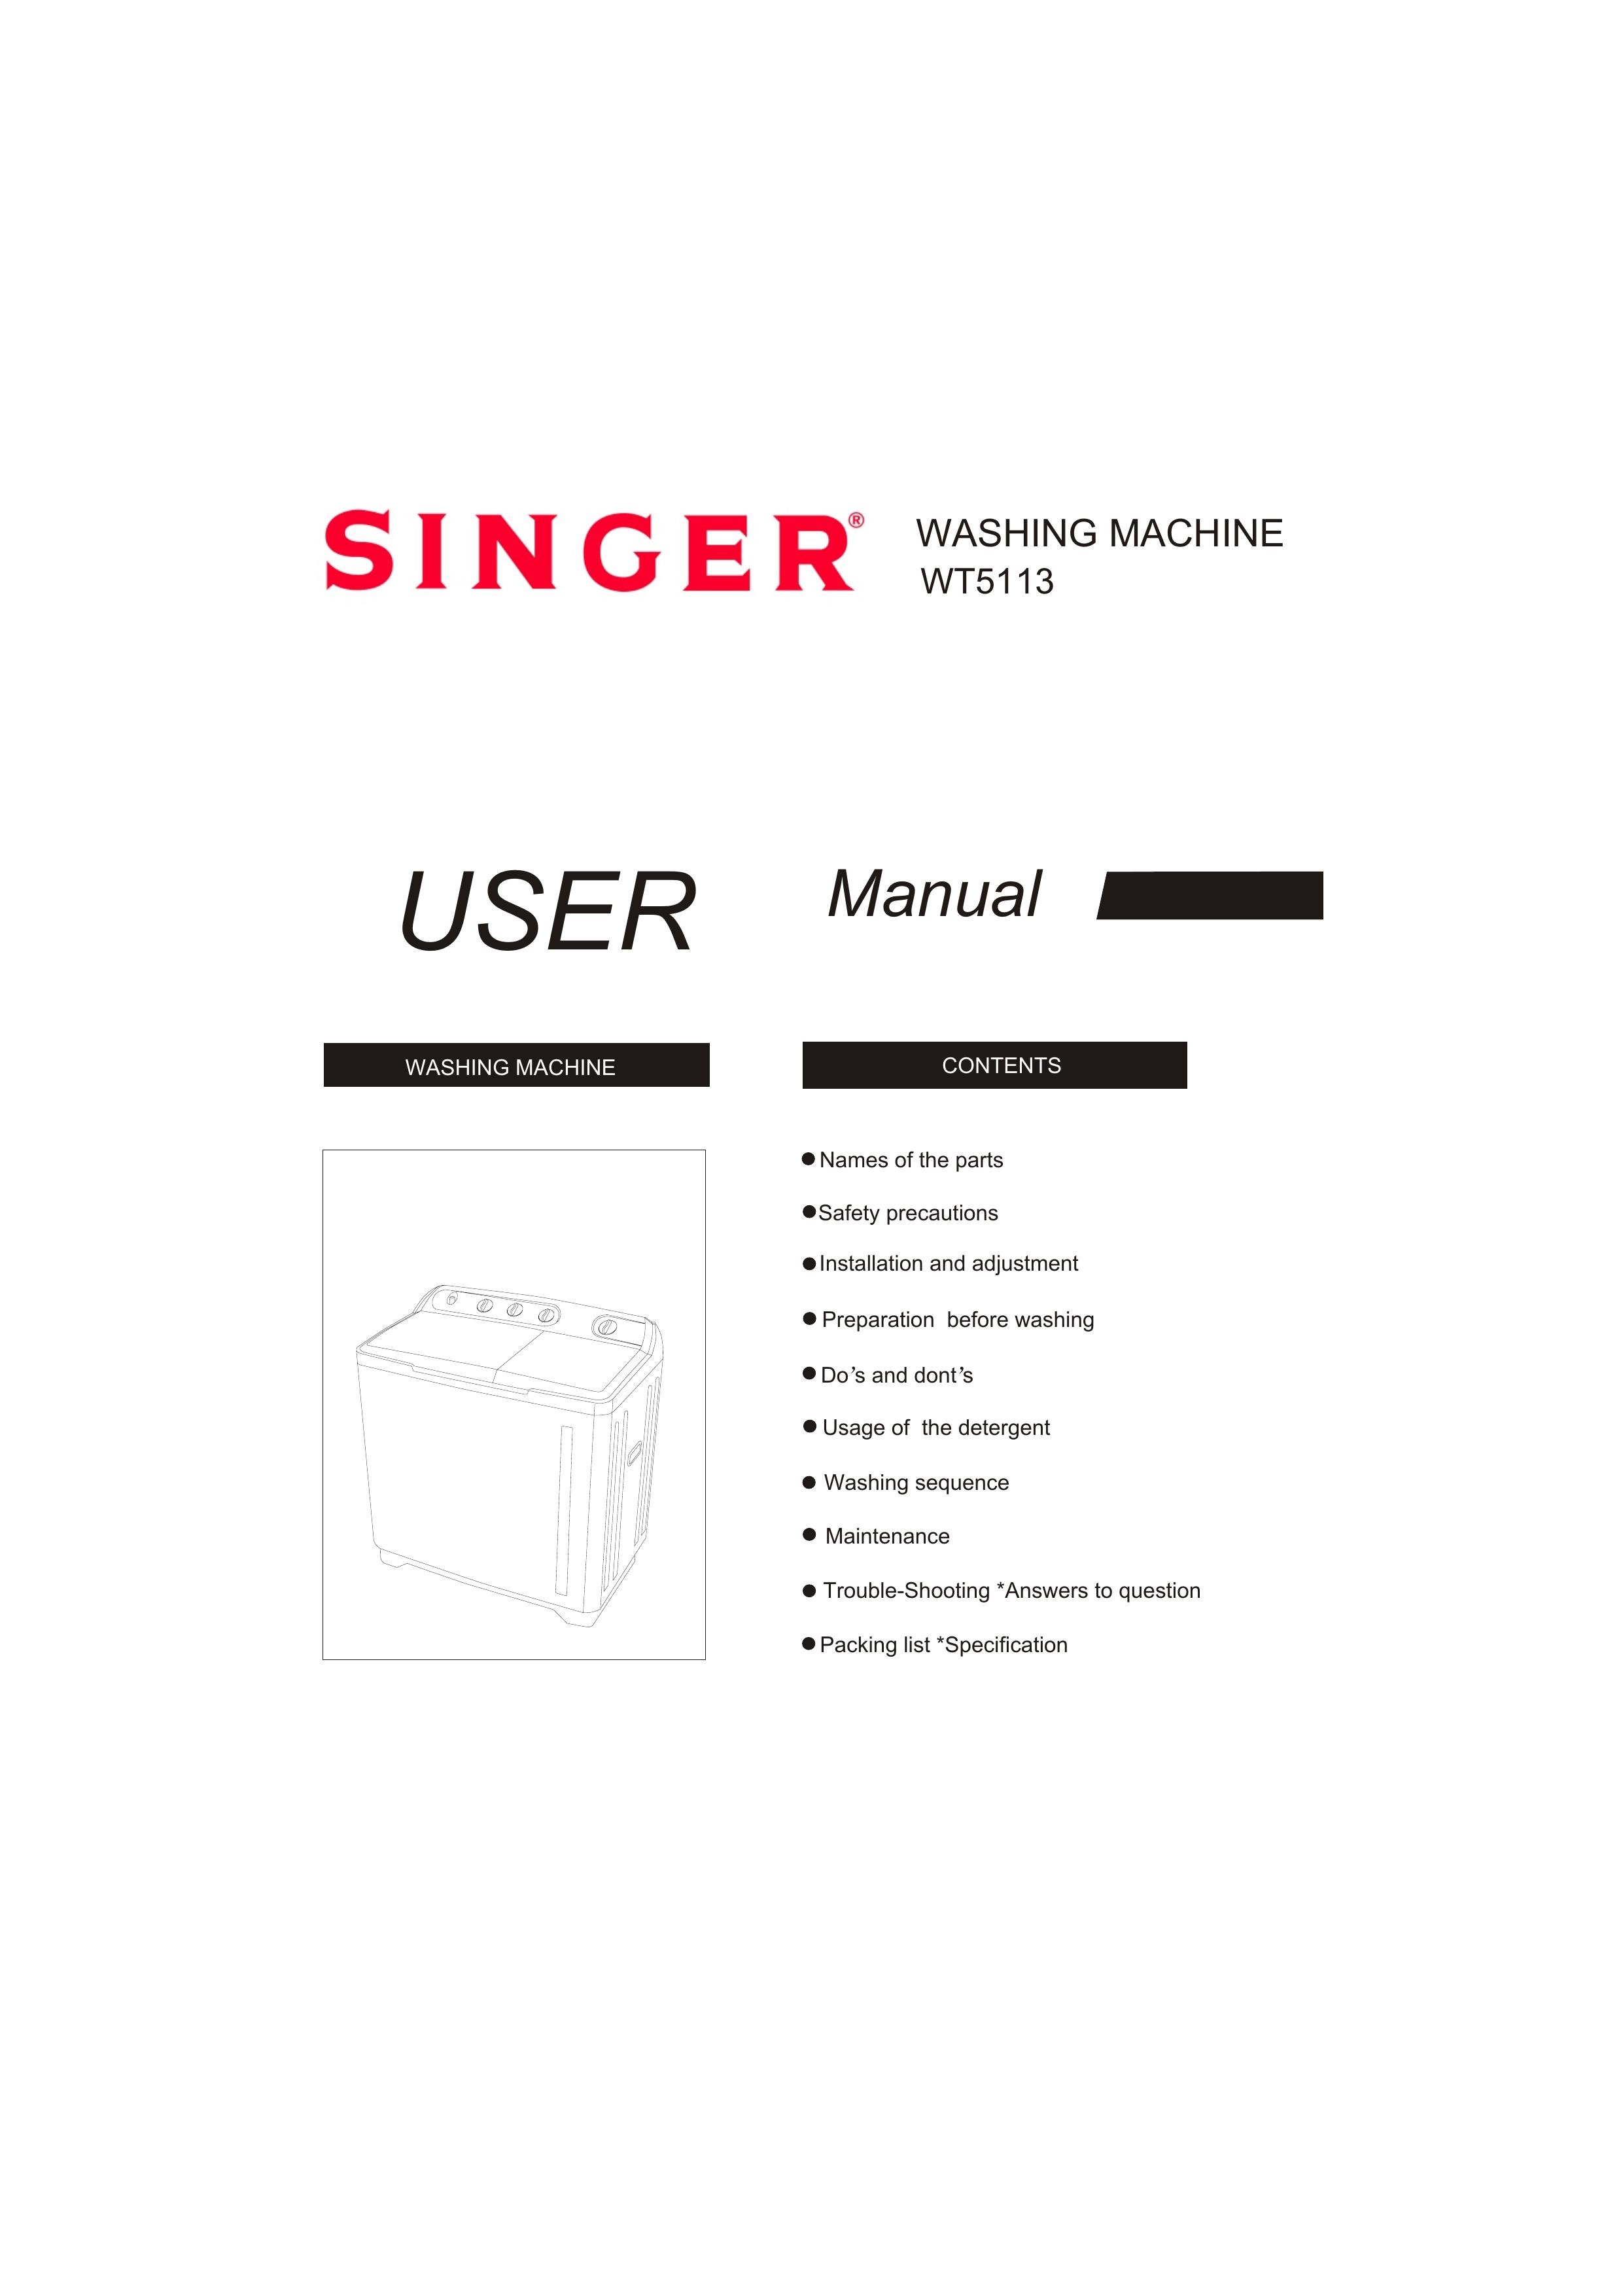 Singer WT5113 Washer/Dryer User Manual (Page 1)